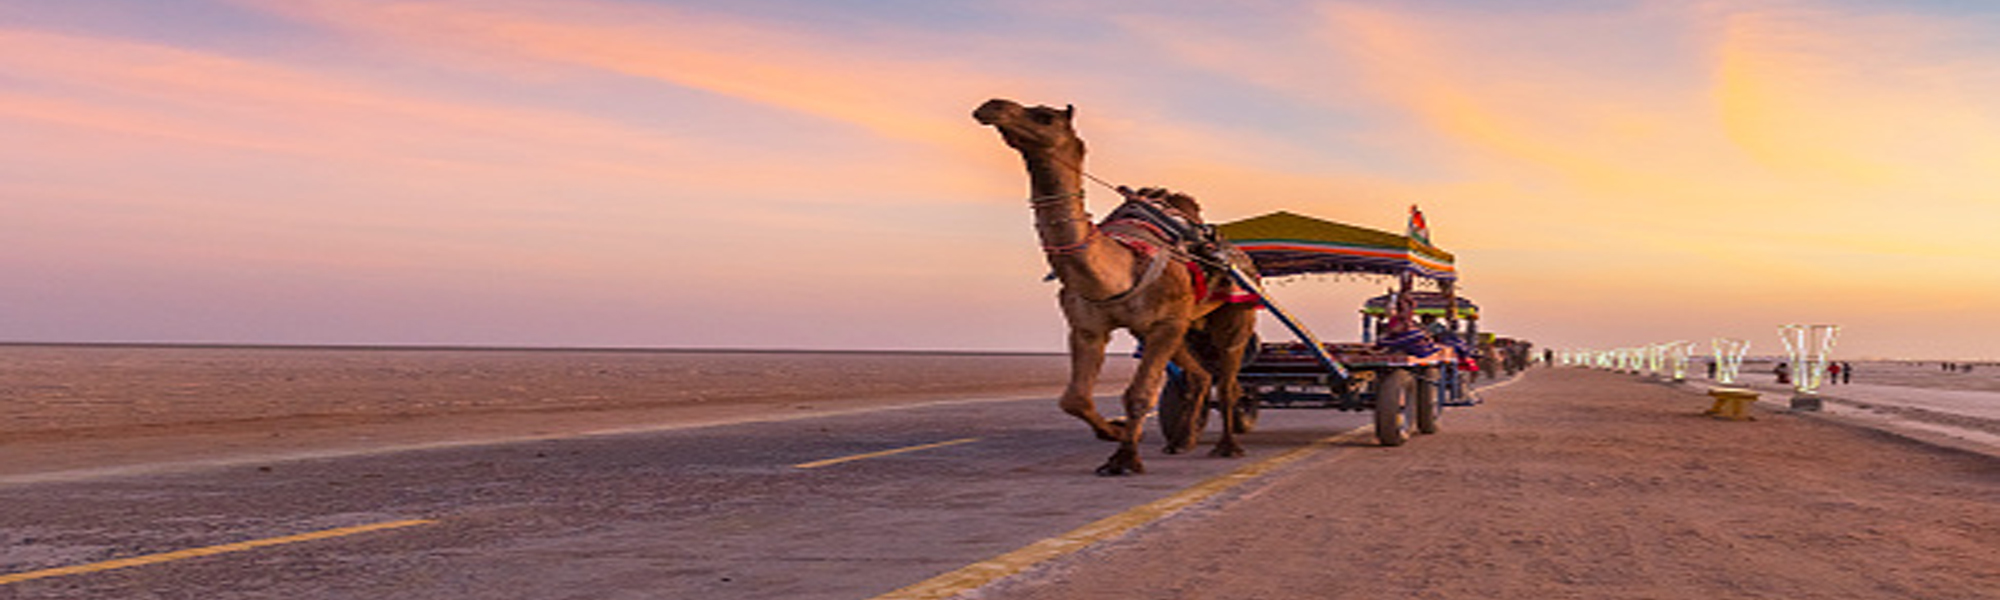 Camel Safari Tours in India with Goa Tours in India